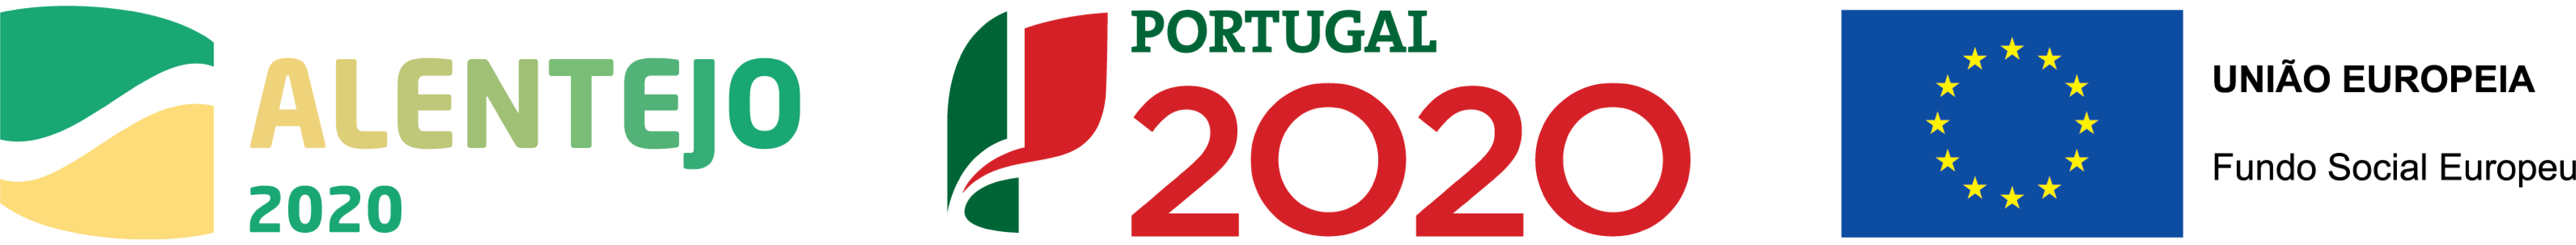 (Português) Financiamento Portugal 2020